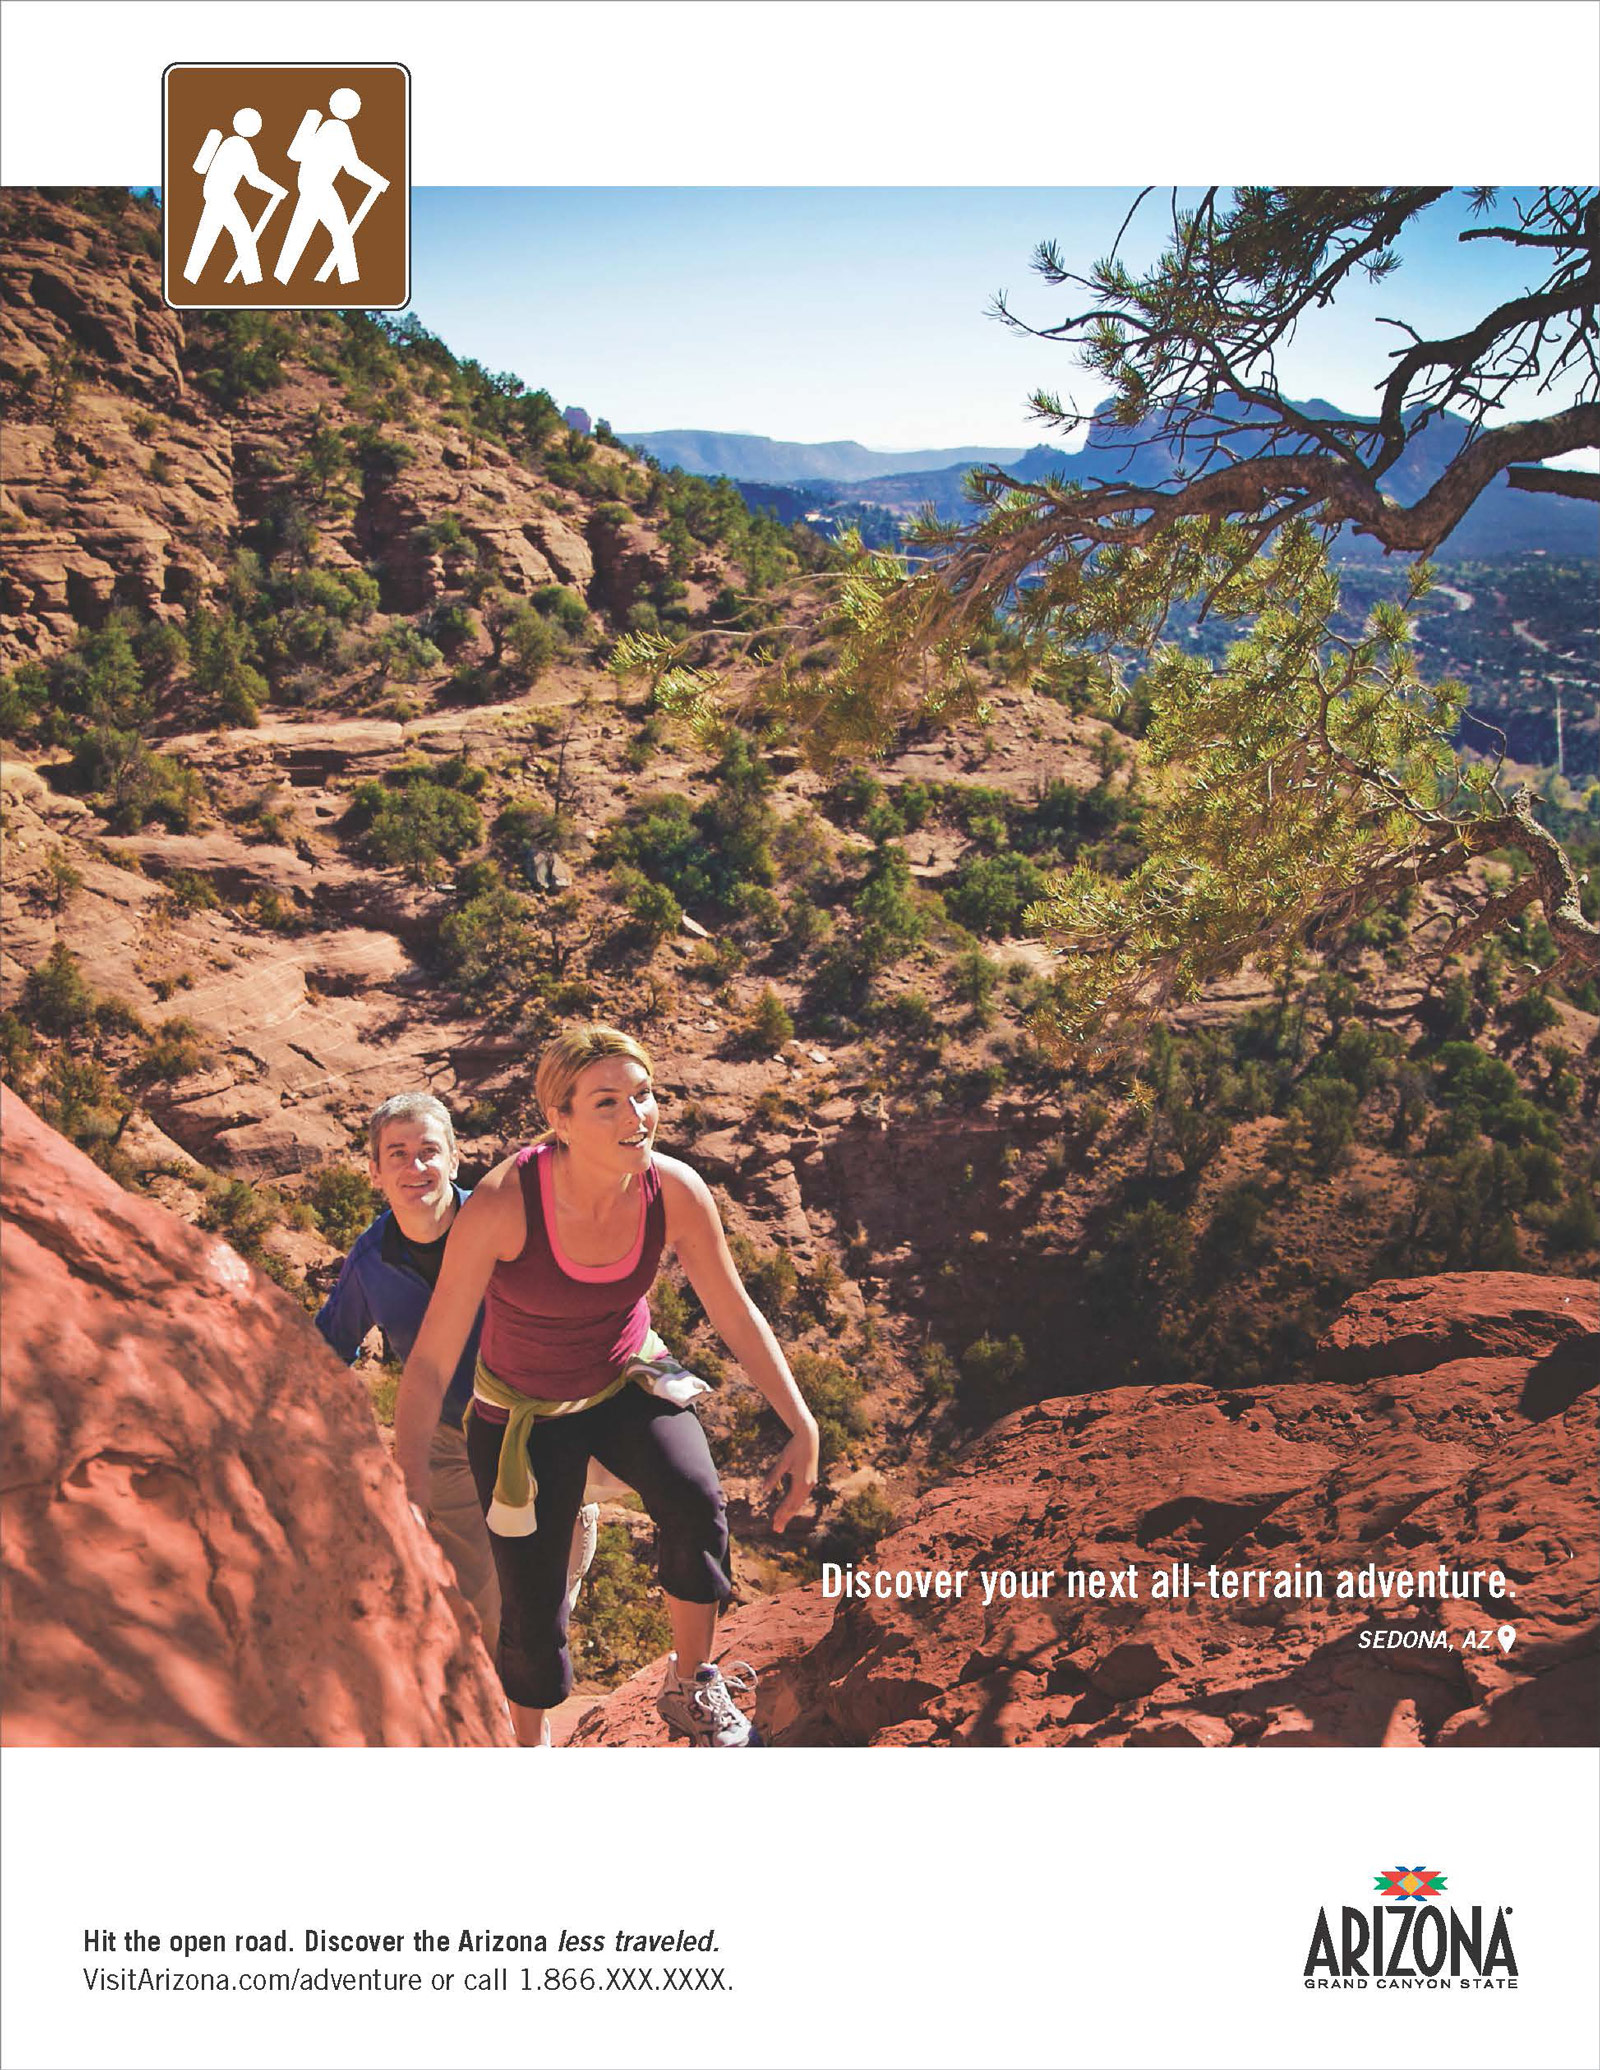 Arizona Office of Tourism - Sedona hiking ad